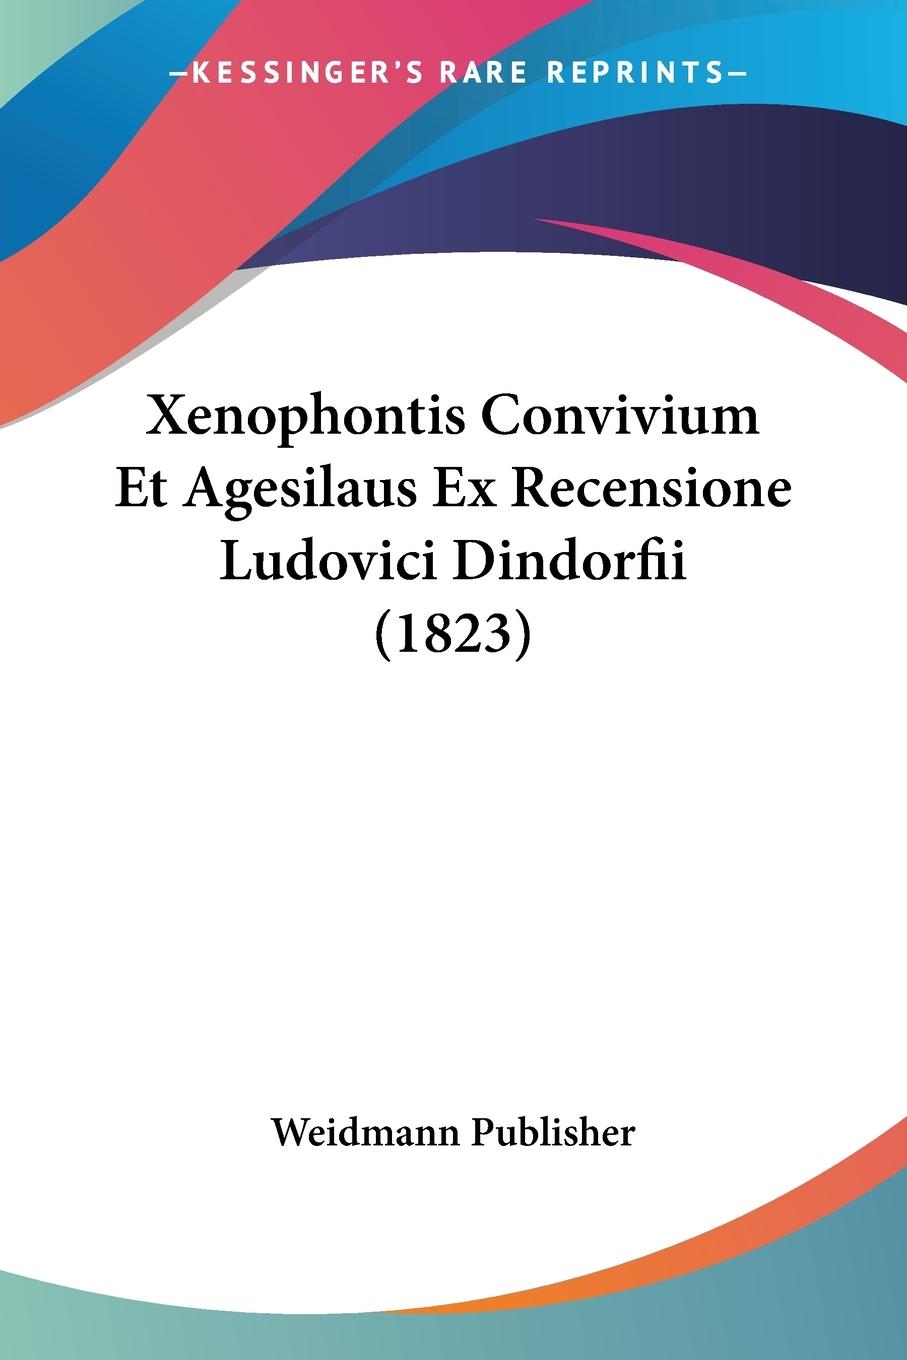 Xenophontis Convivium Et Agesilaus Ex Recensione Ludovici Dindorfii (1823) - Weidmann Publisher